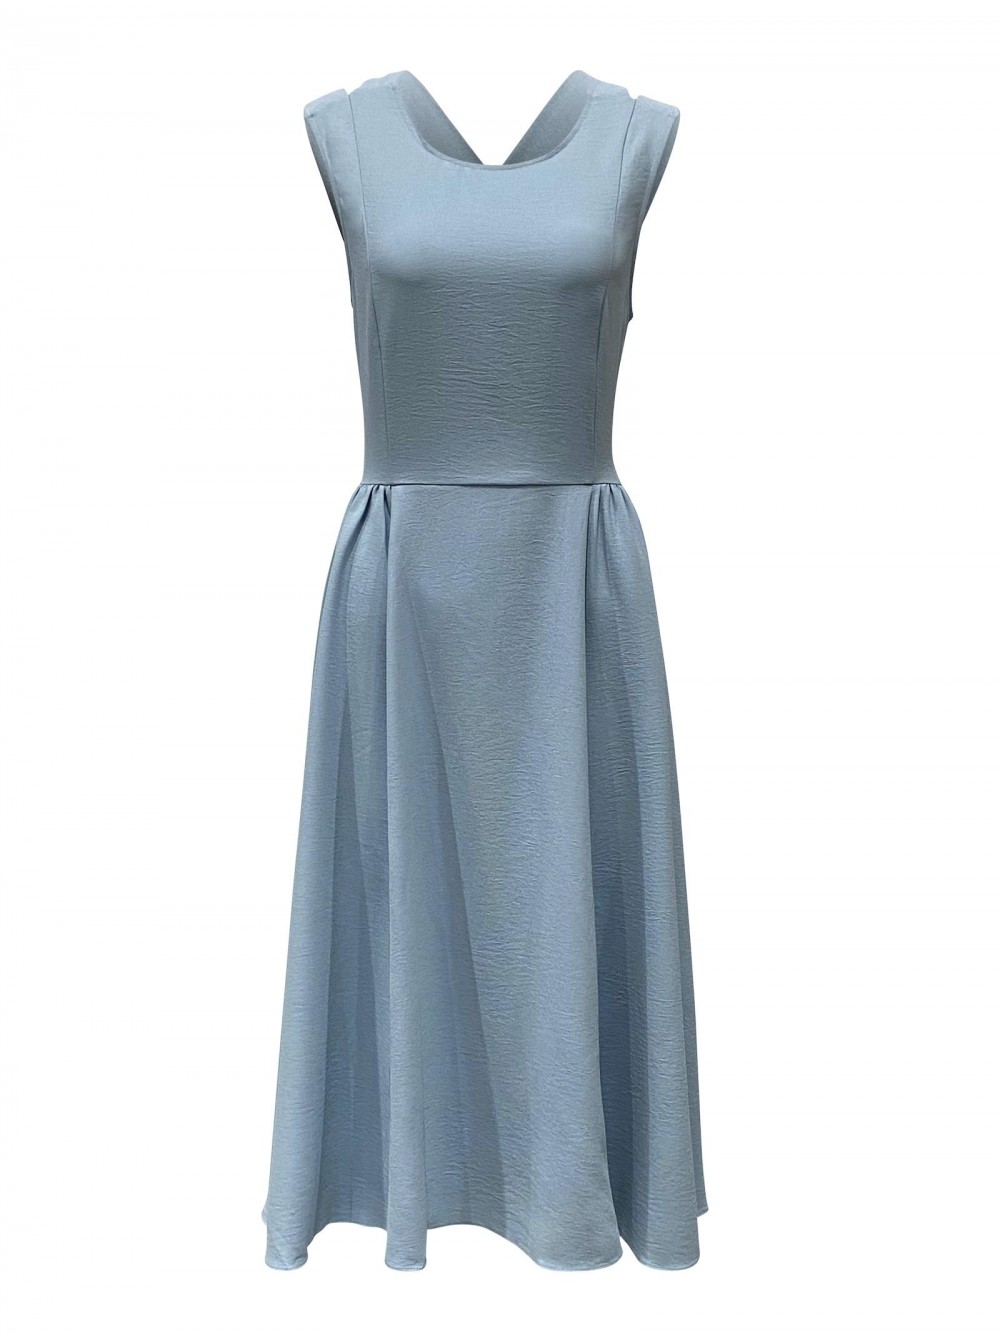 Šaty Tina sv.modré